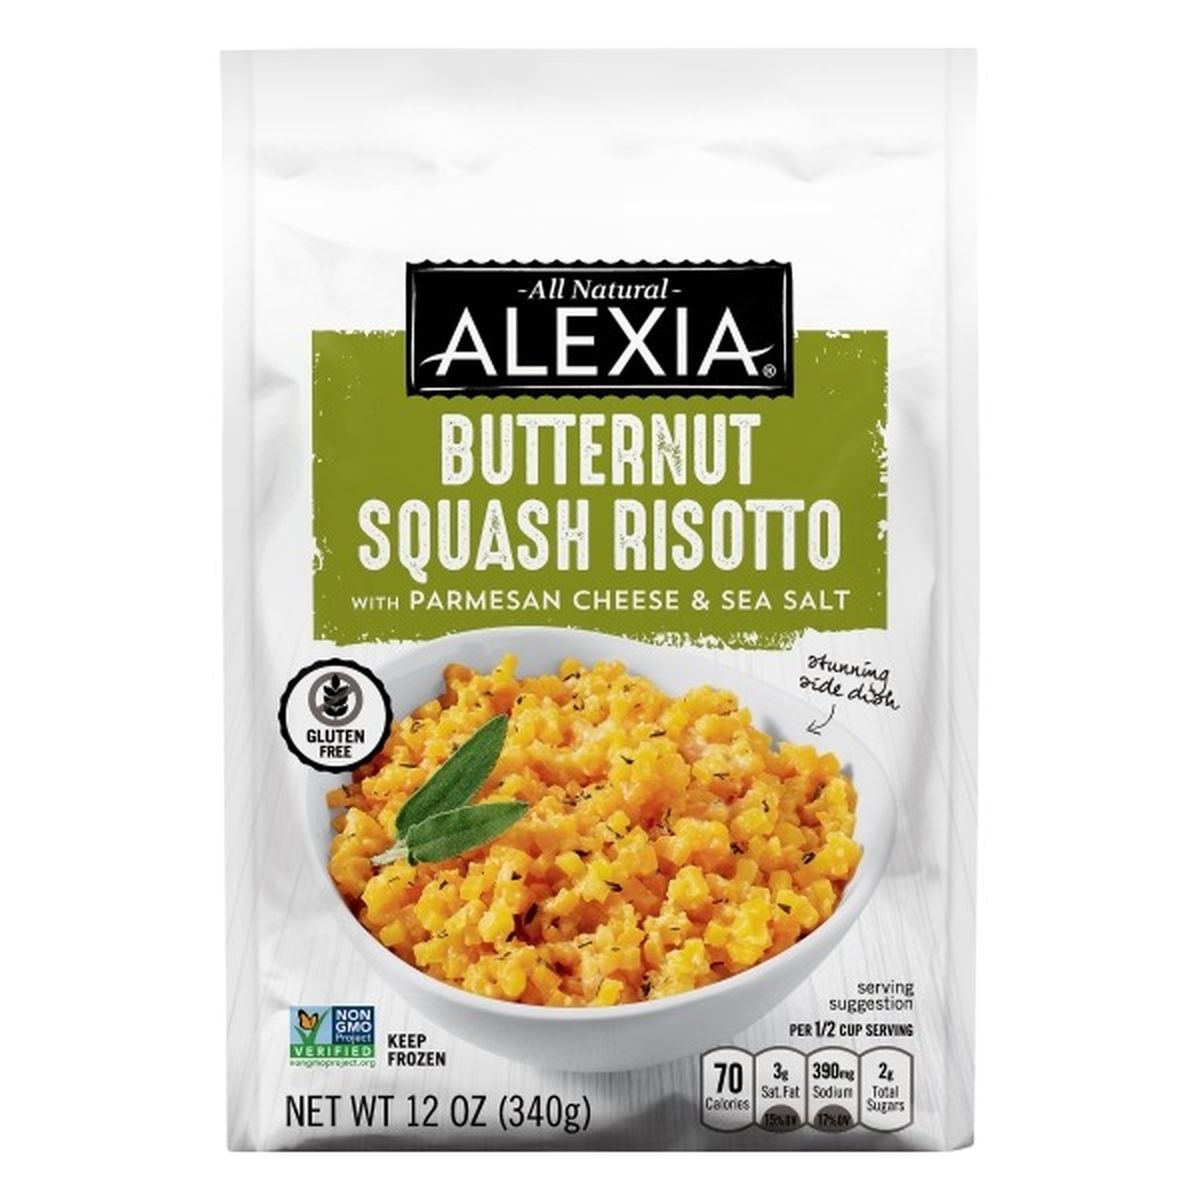 Calories in Alexia Risotto, Butternut Squash